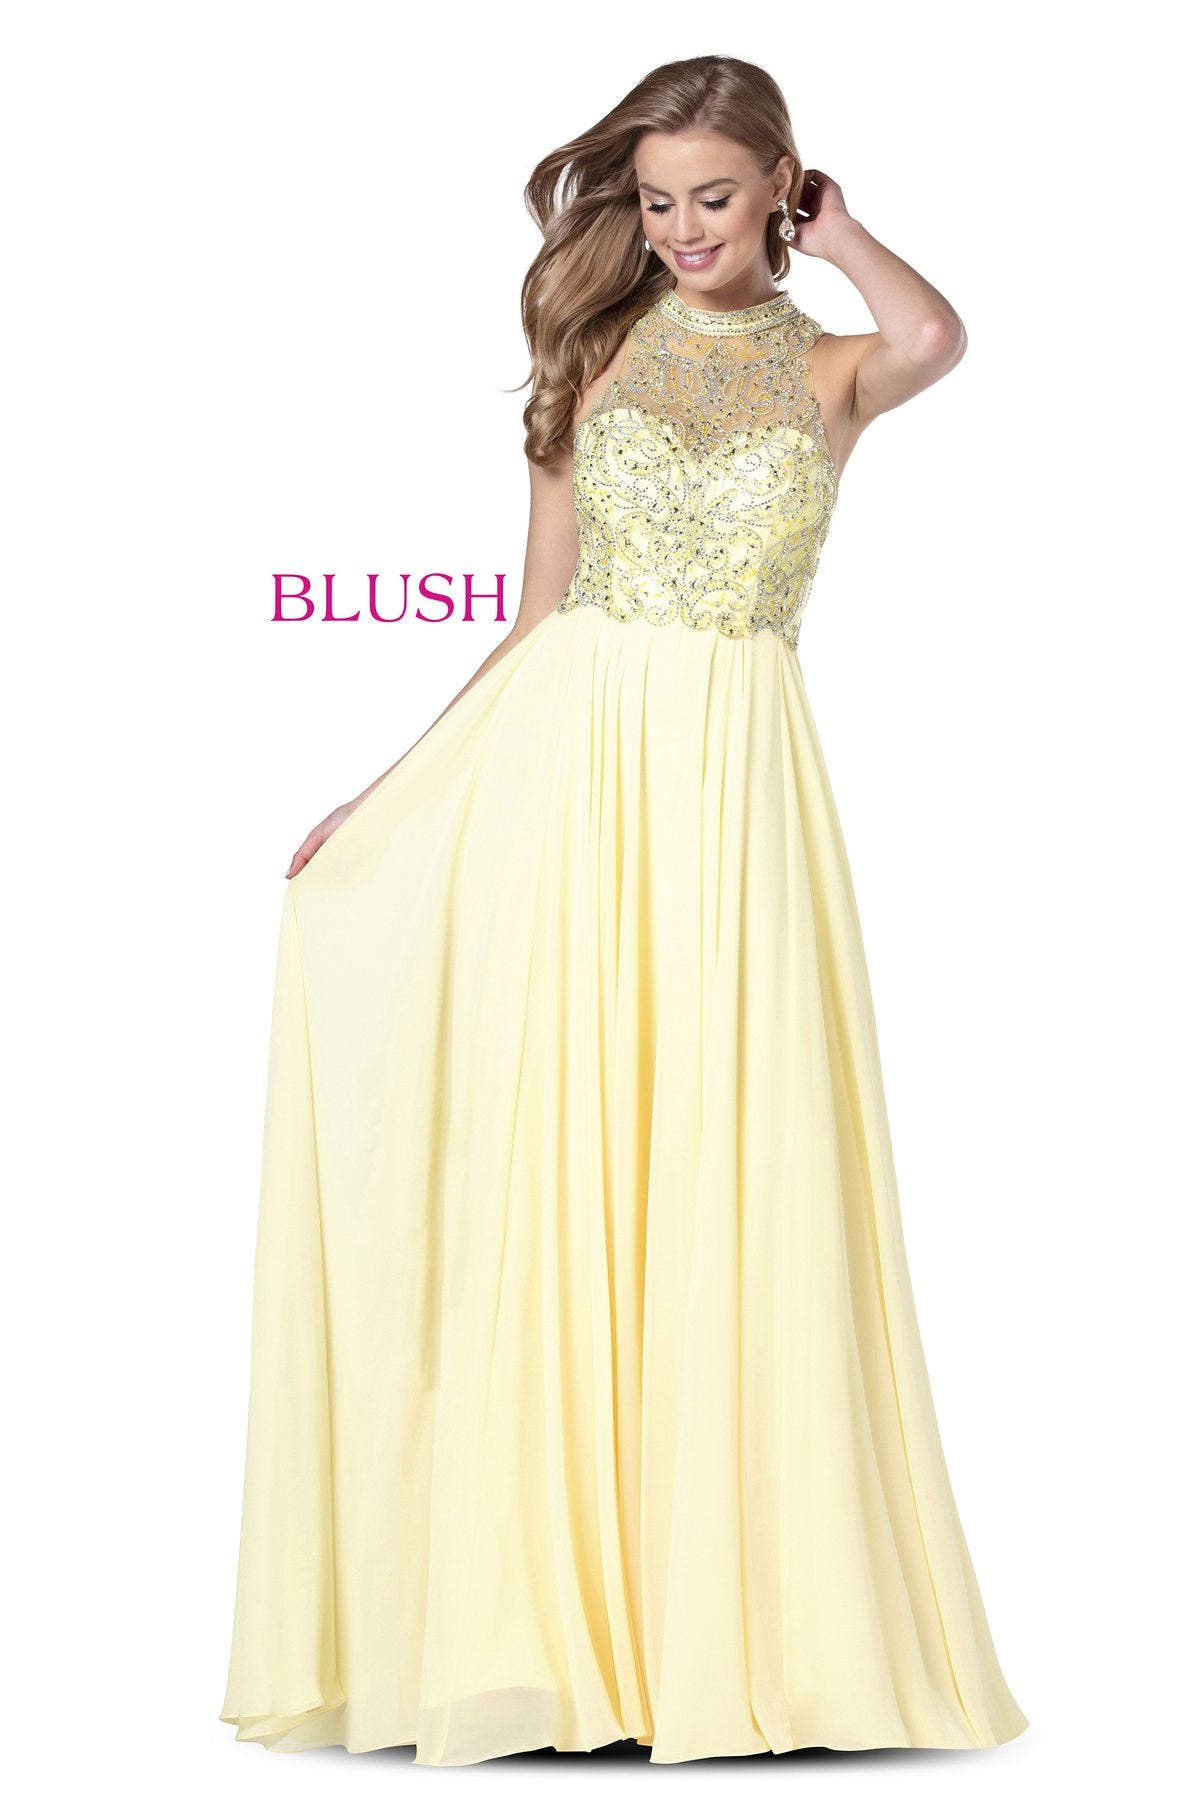 Blush Prom 11942 Size 10 White Chiffon A Line Prom Dress Embellished High Neckline 2020